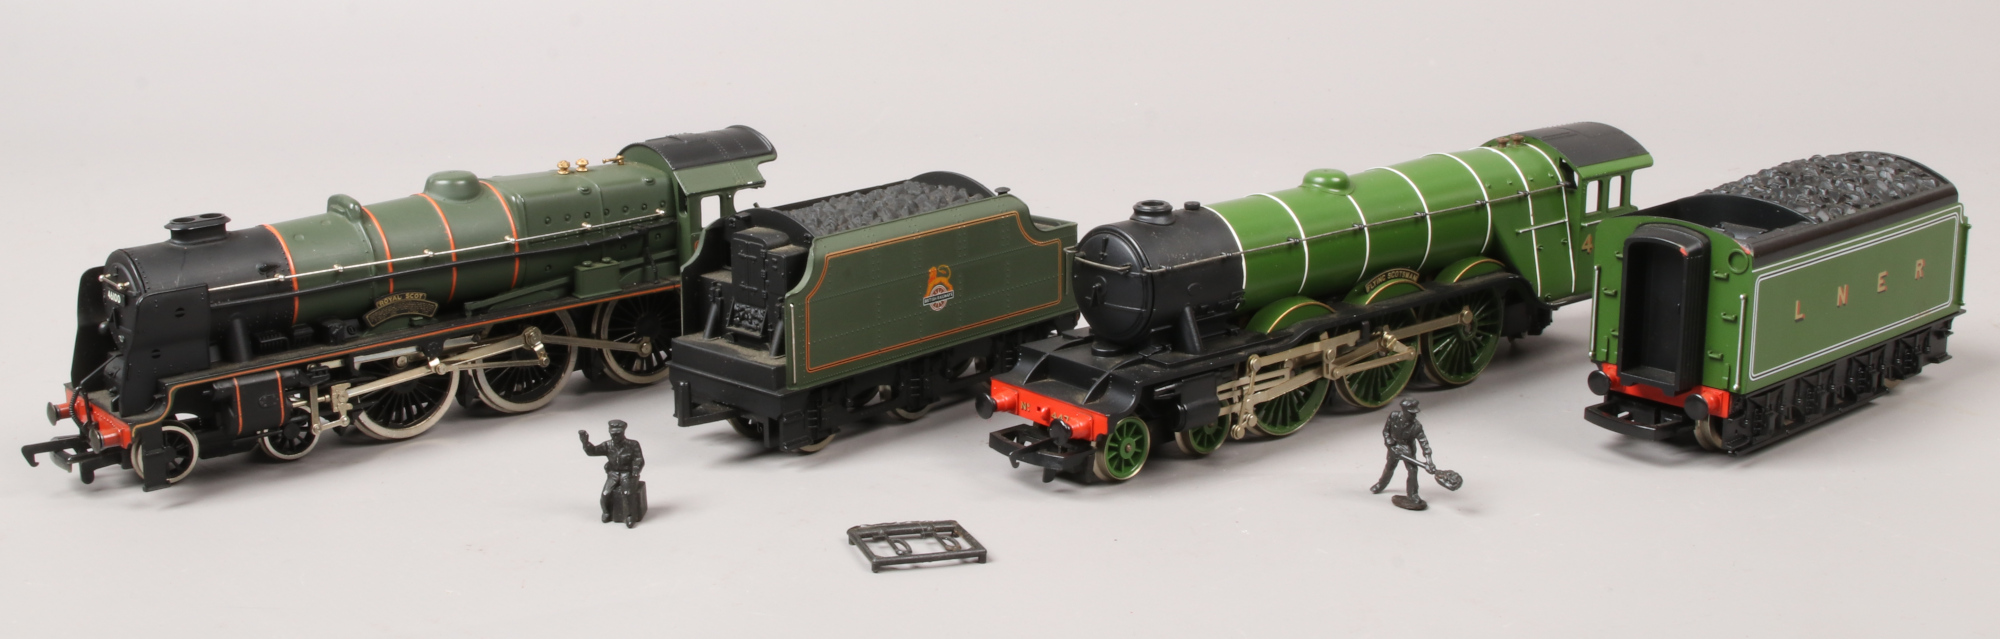 Model railway - A Hornby OO gauge 4-6-2  Flying Scotsman locomotive and tender and a Mainline oo